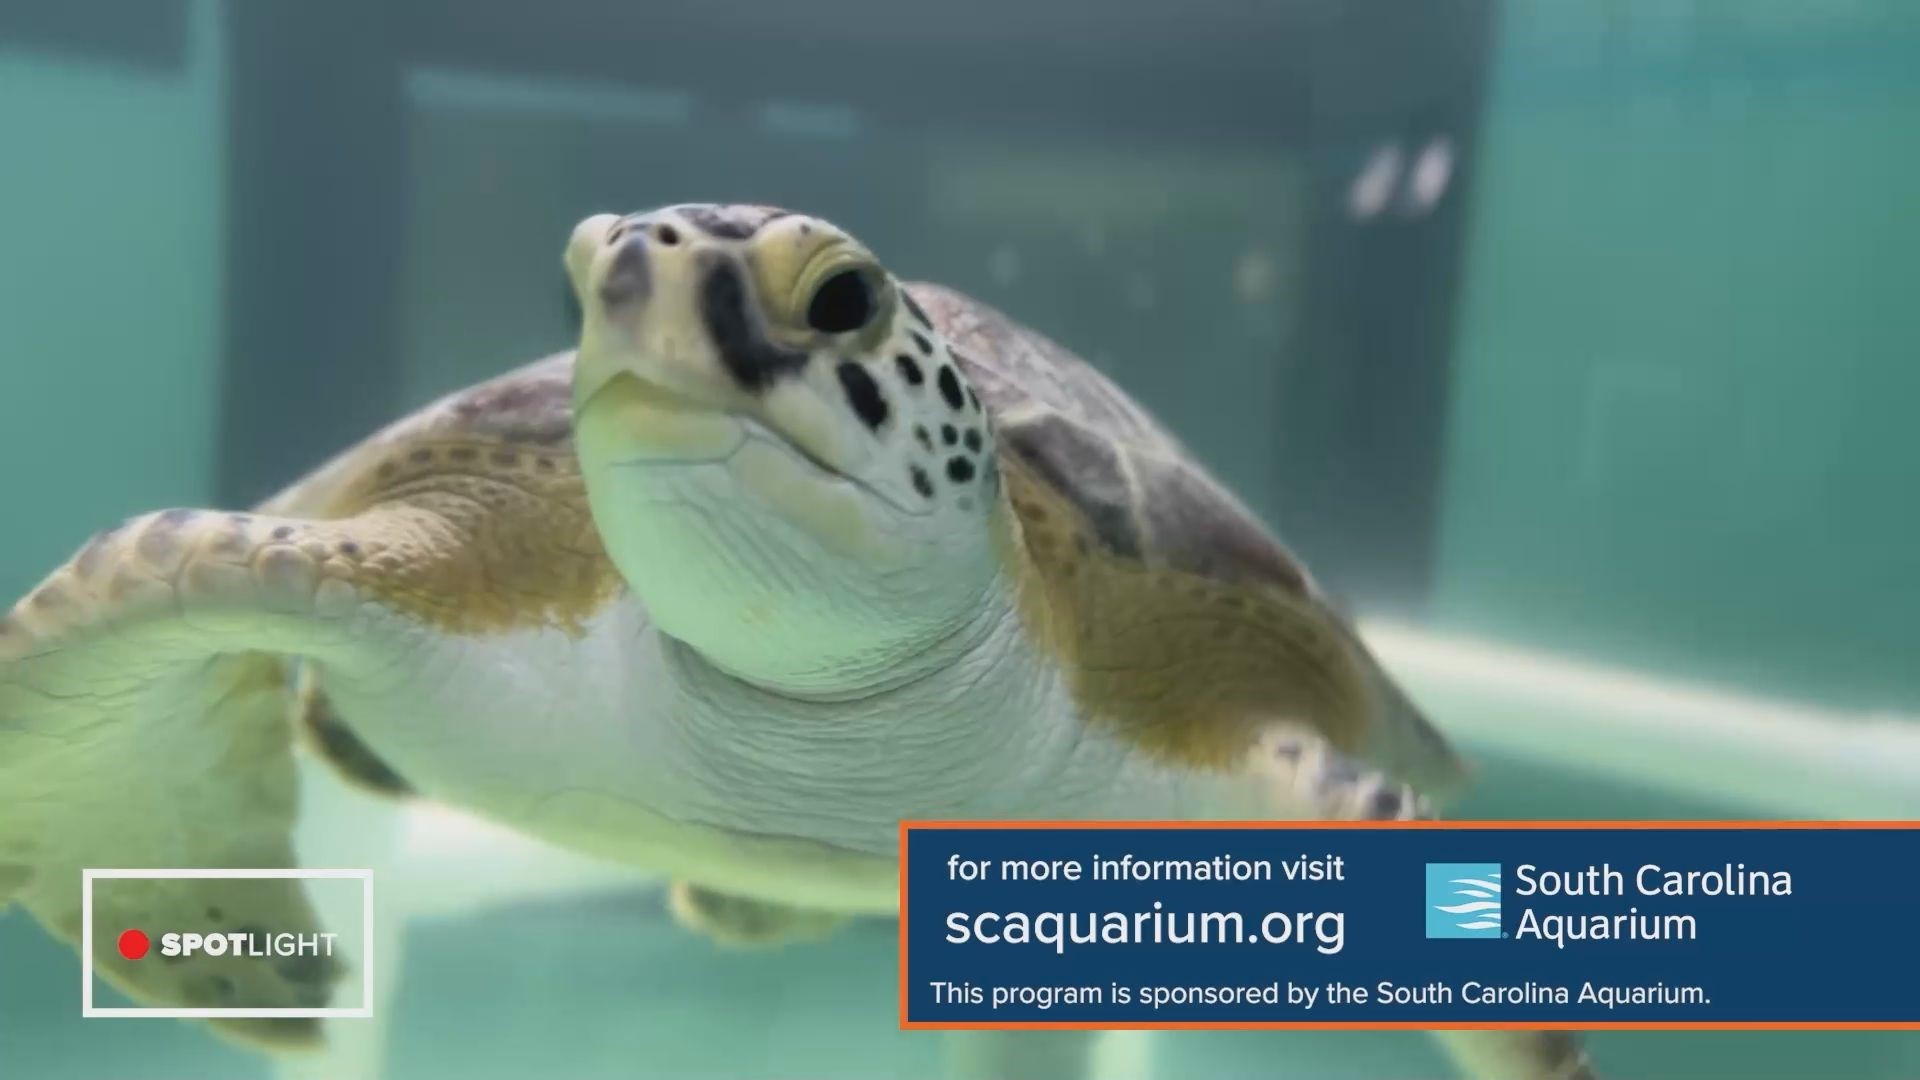 Connect with wildlife at the South Carolina Aquarium Encounter.